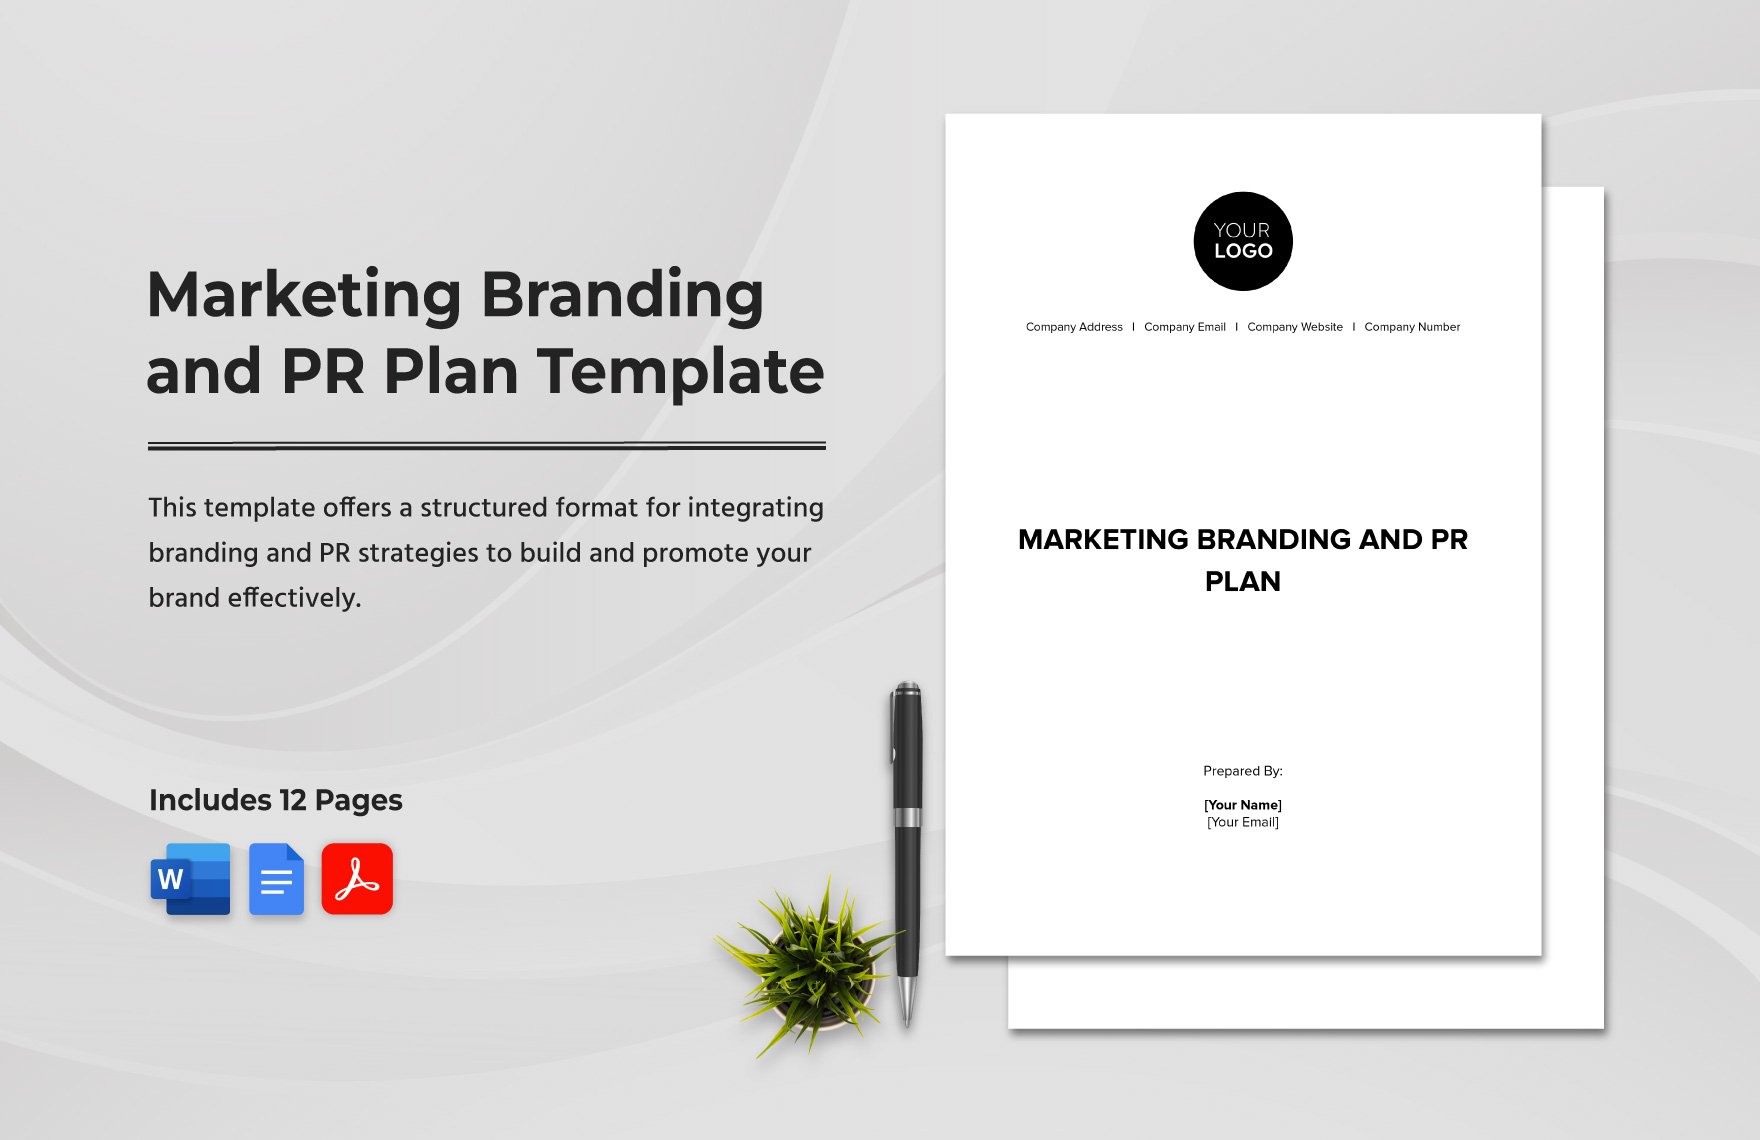 Marketing Branding and PR Plan Template